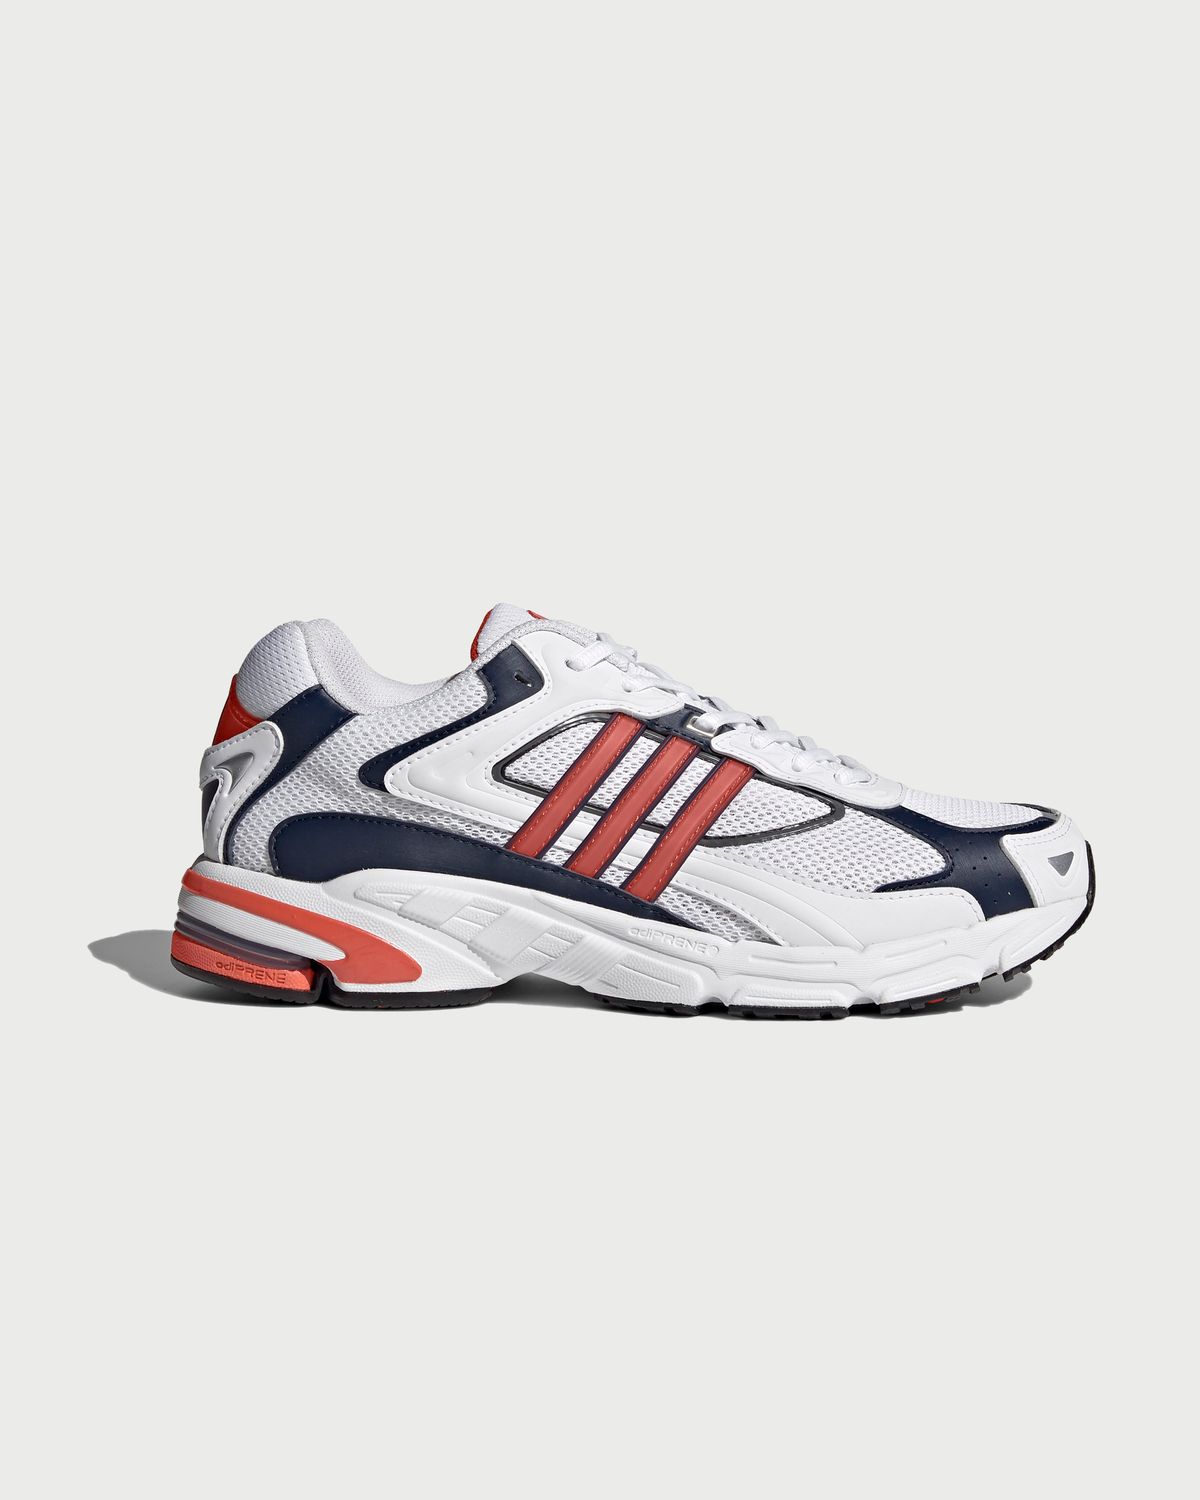 Adidas – Response CL White/Orange | Highsnobiety Shop